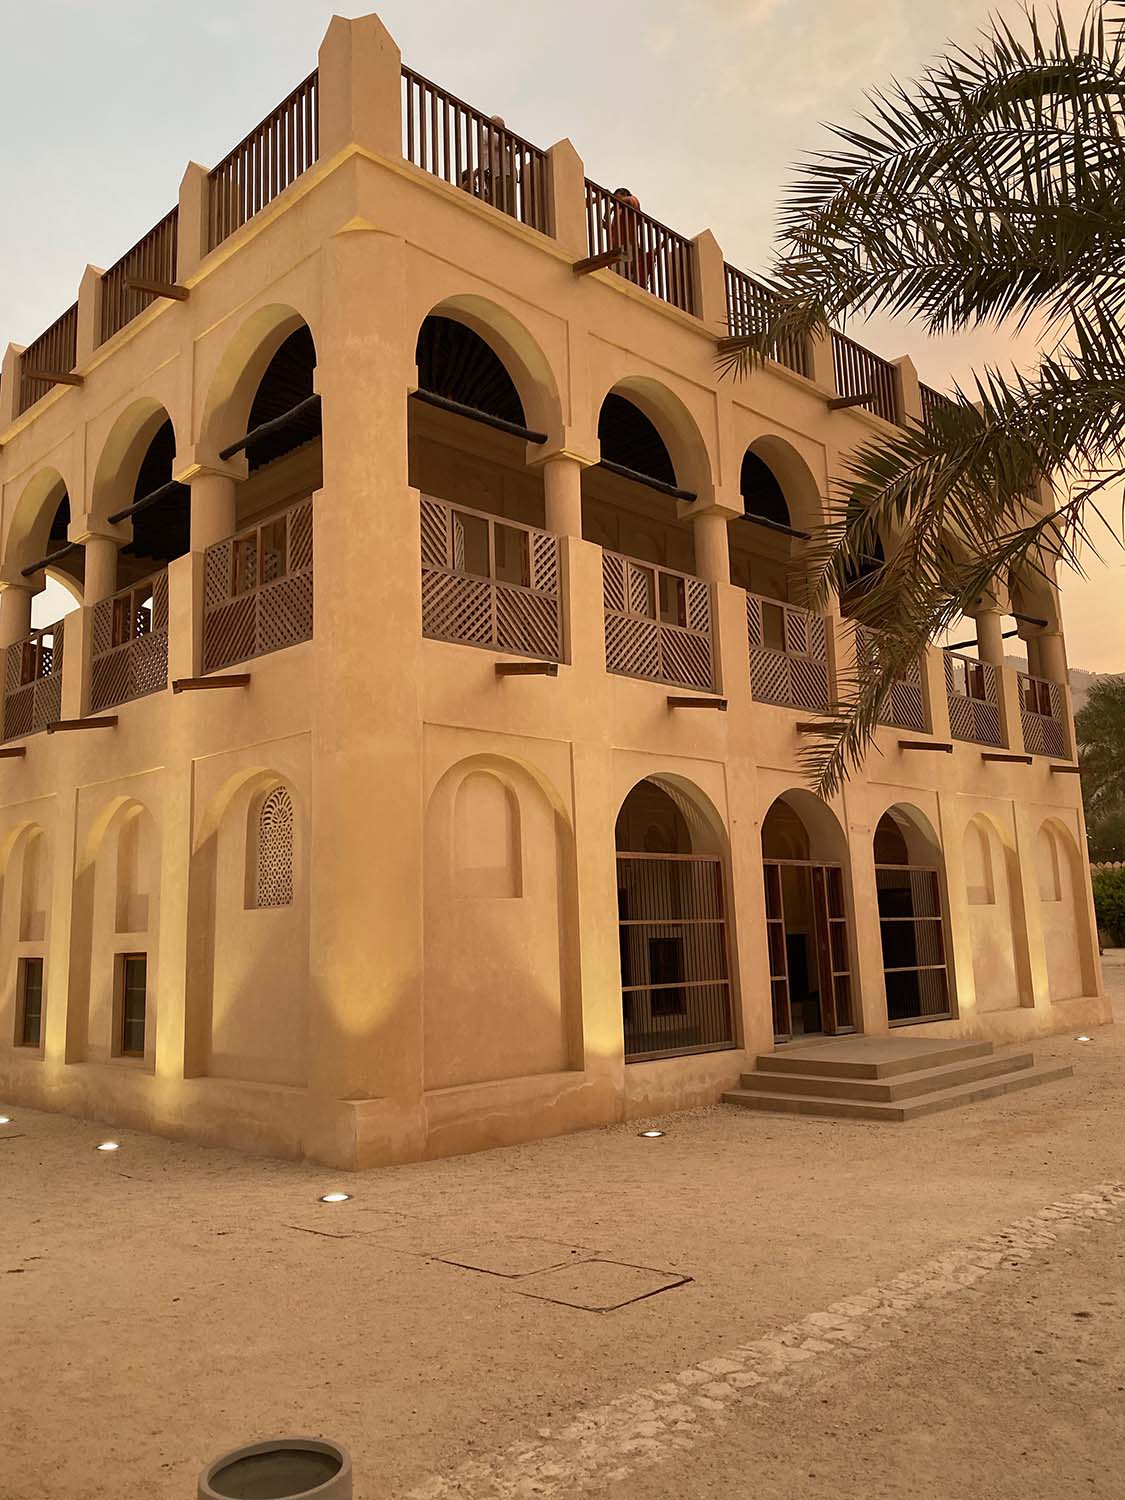 Sheikh Abdullah bin Qasim Al Thani Palace